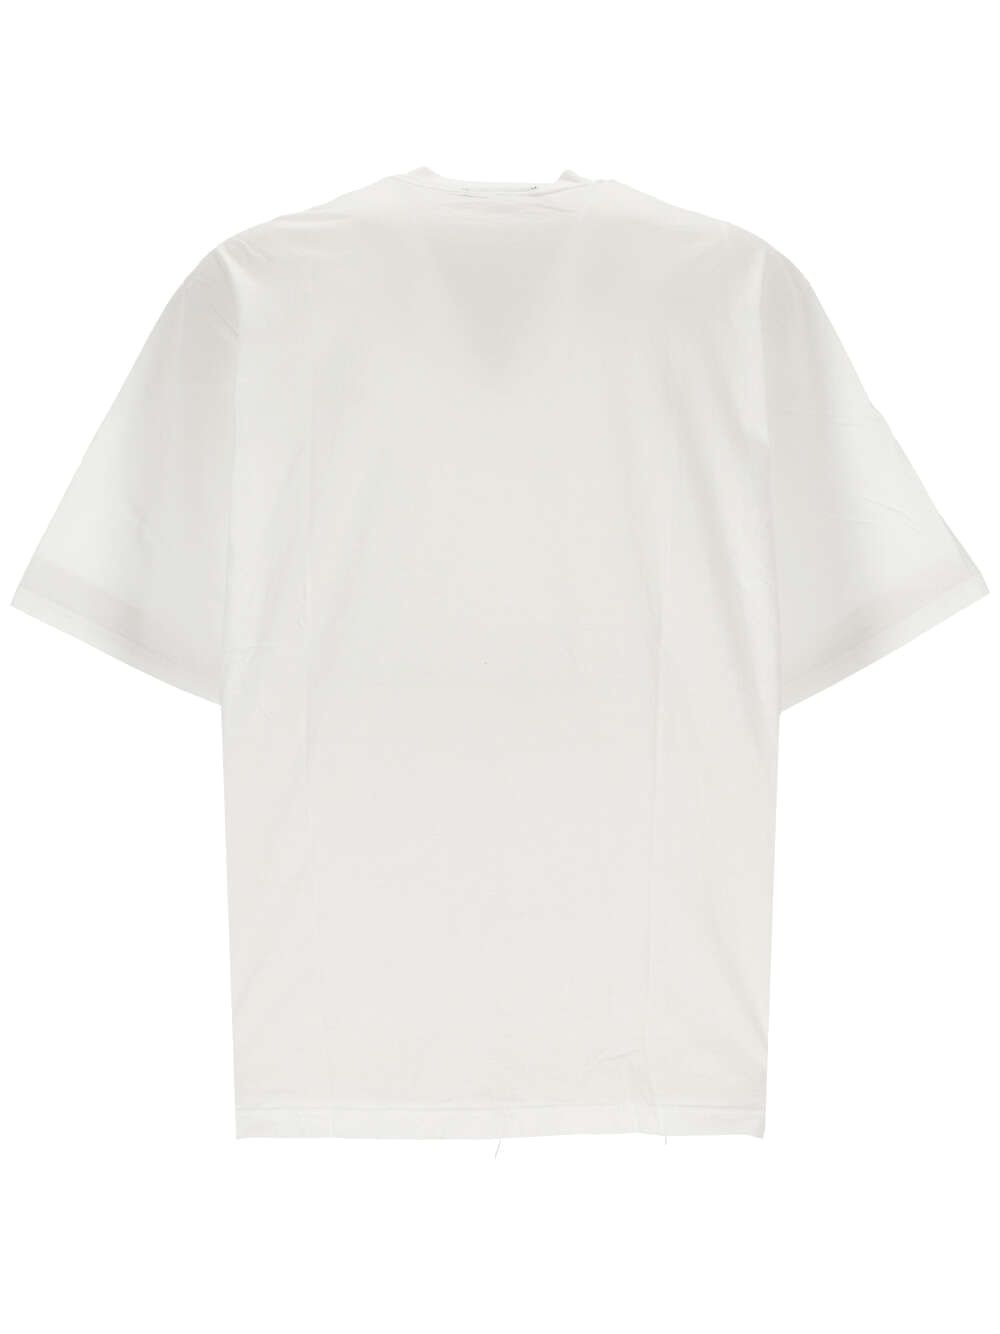 Blusa bianca con dettagli cut-out